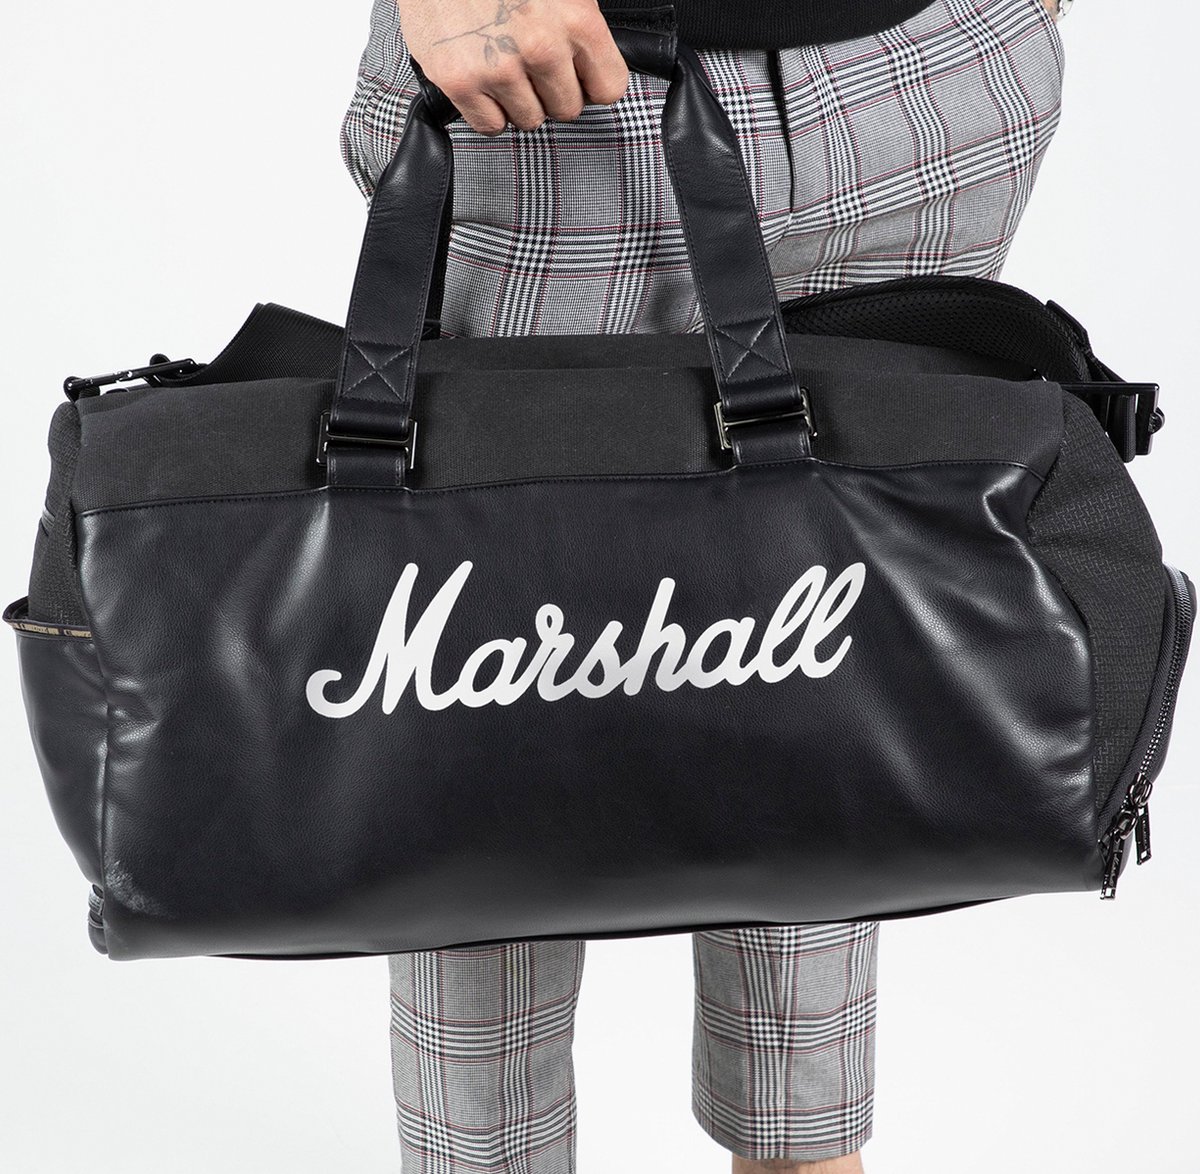 Marshall Duffel Bag reistas weekentas, sport tas 48 liter, 47 x 32 x 32 cm